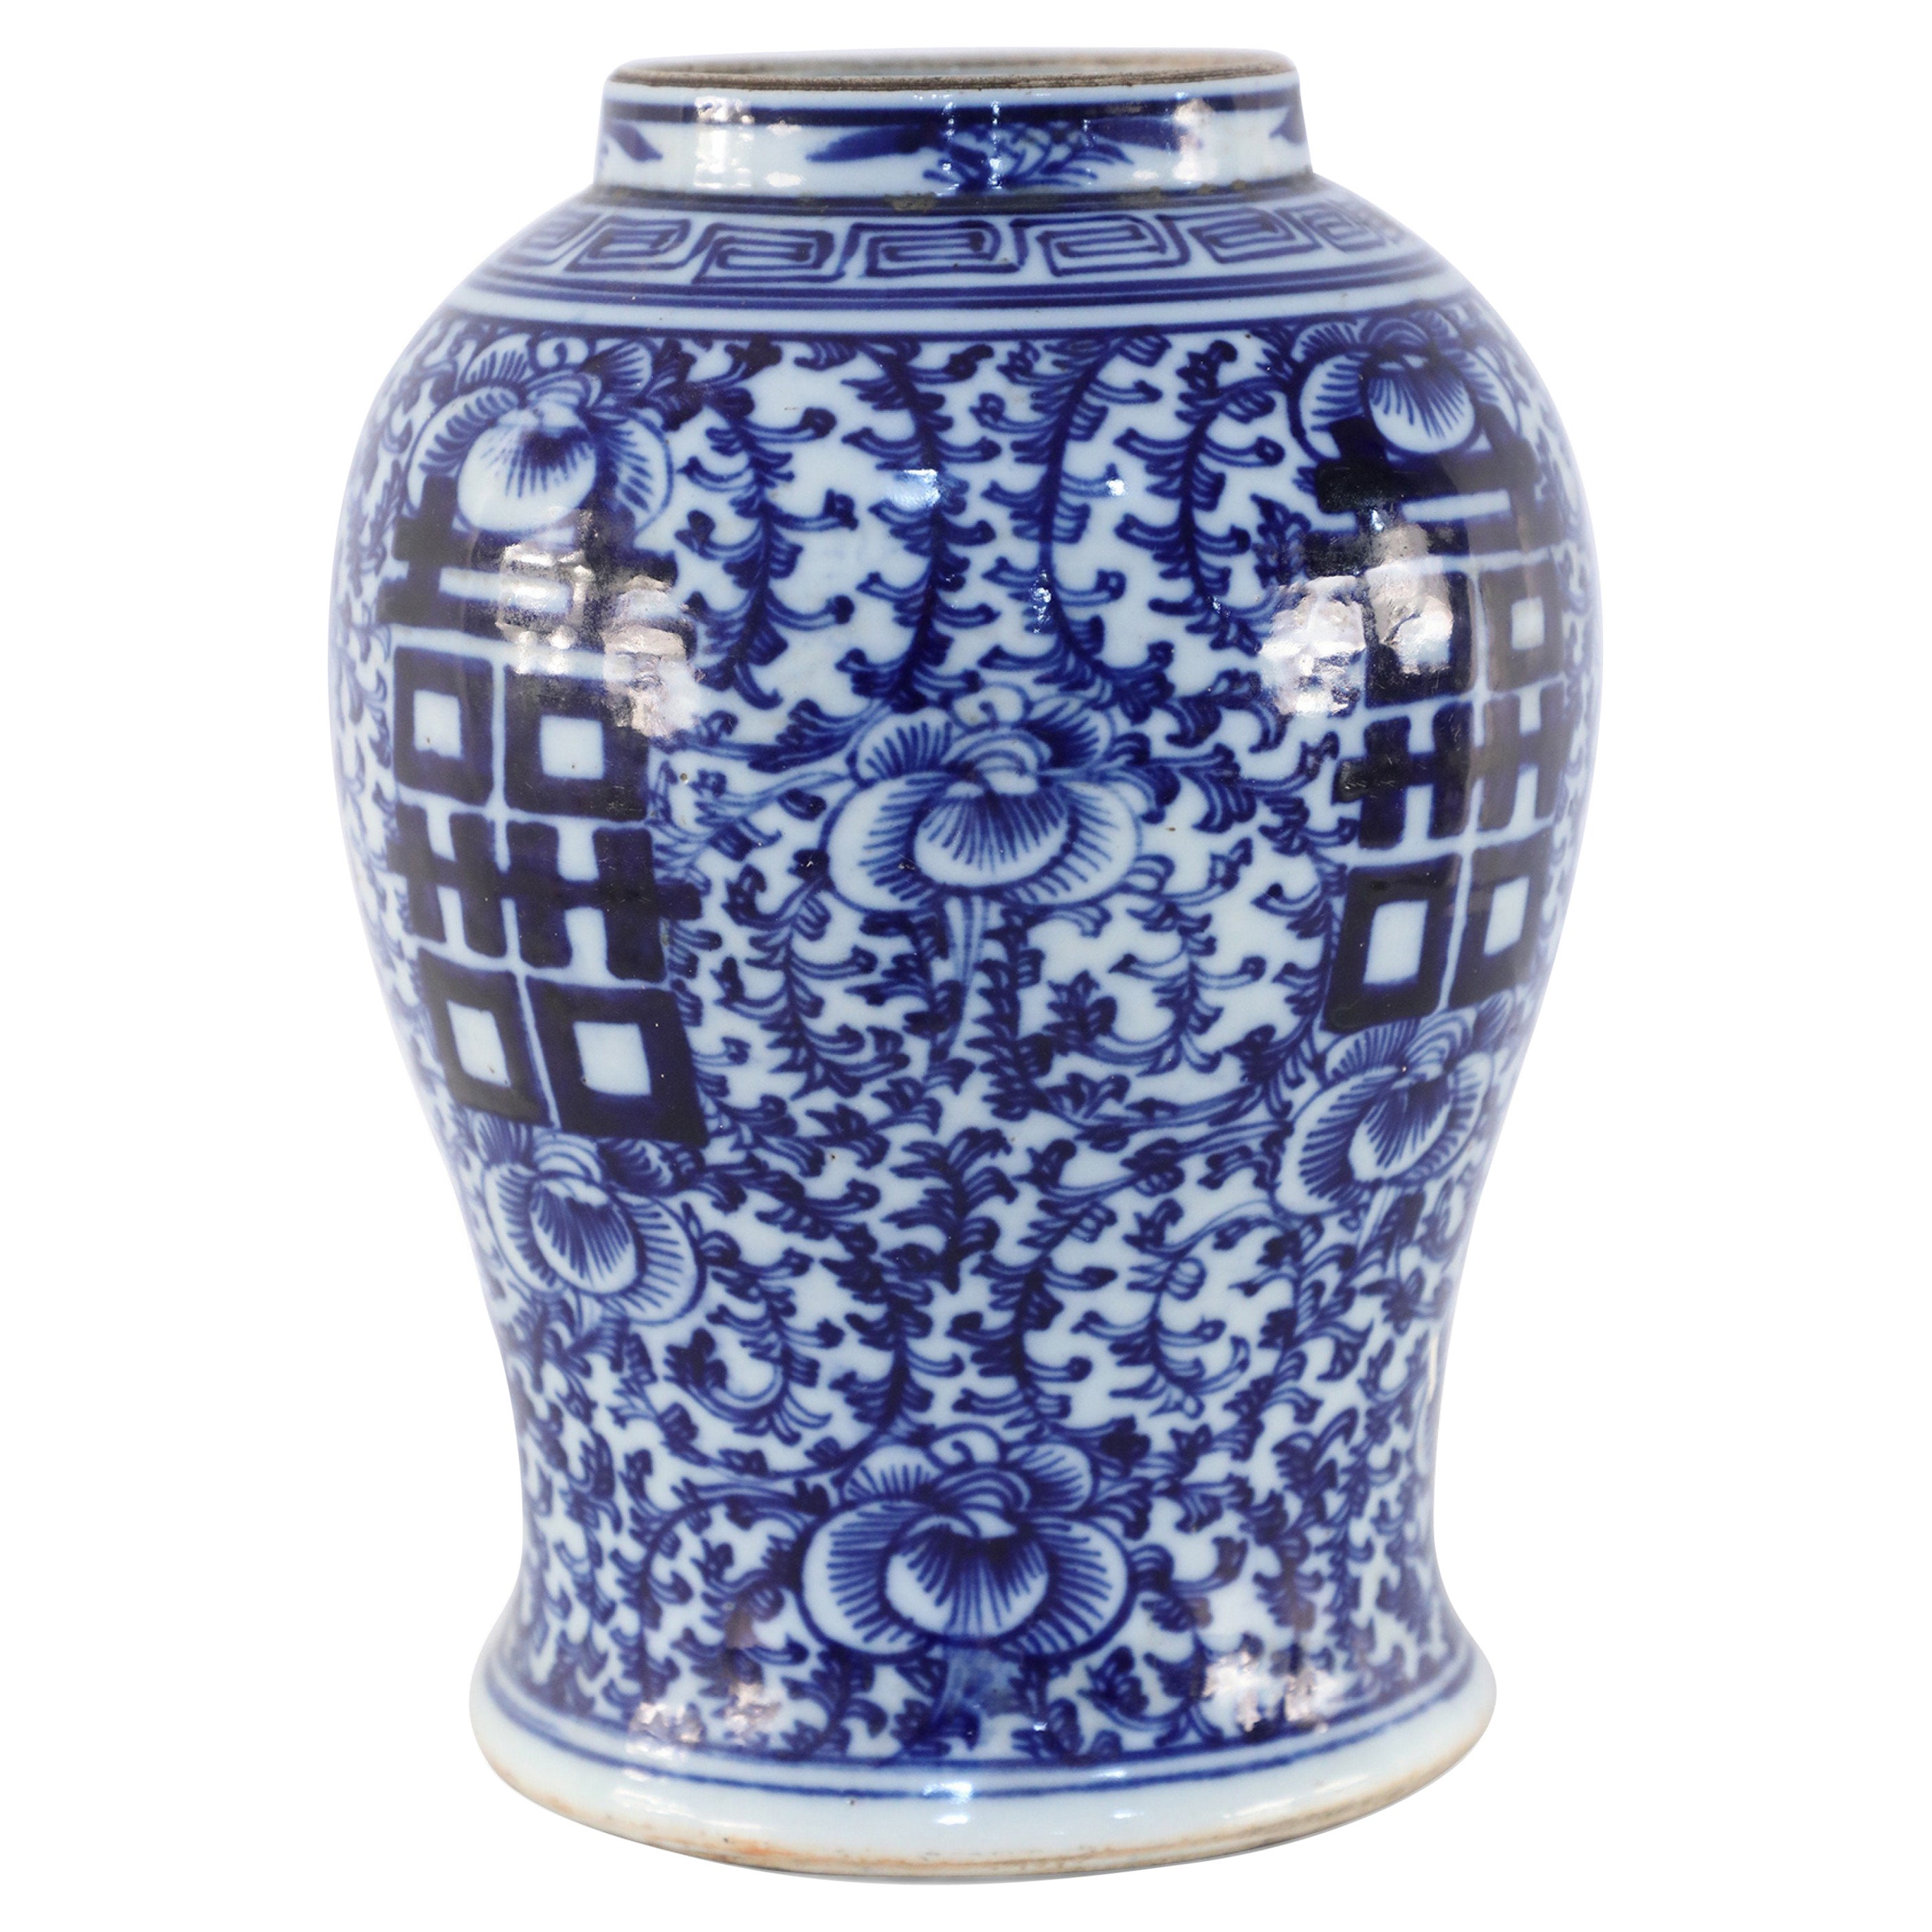 Chinese Off-White and Navy Vine Motif Porcelain Urn Vase